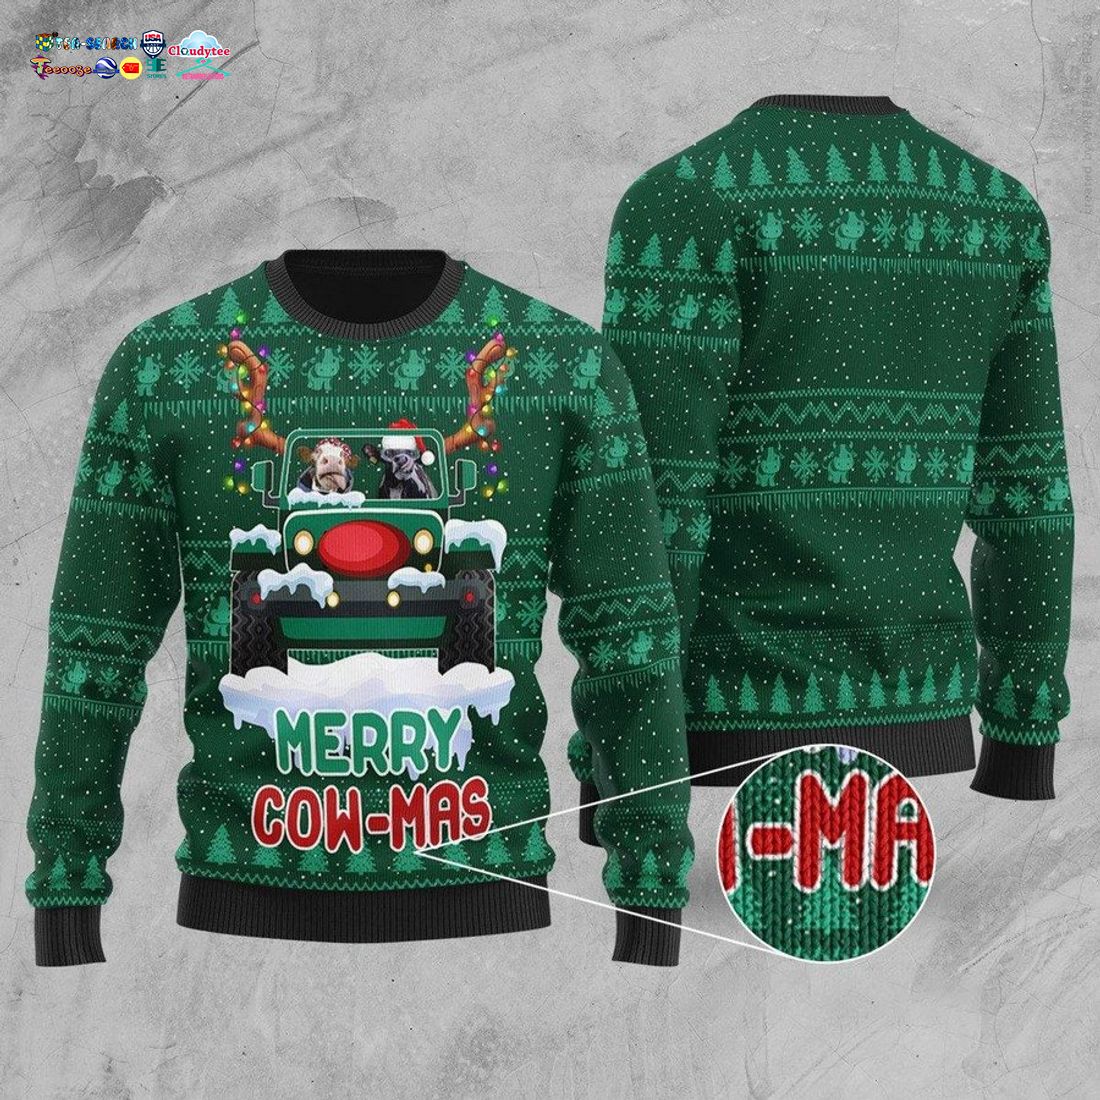 merry-cow-mas-ugly-christmas-sweater-1-AqH2X.jpg